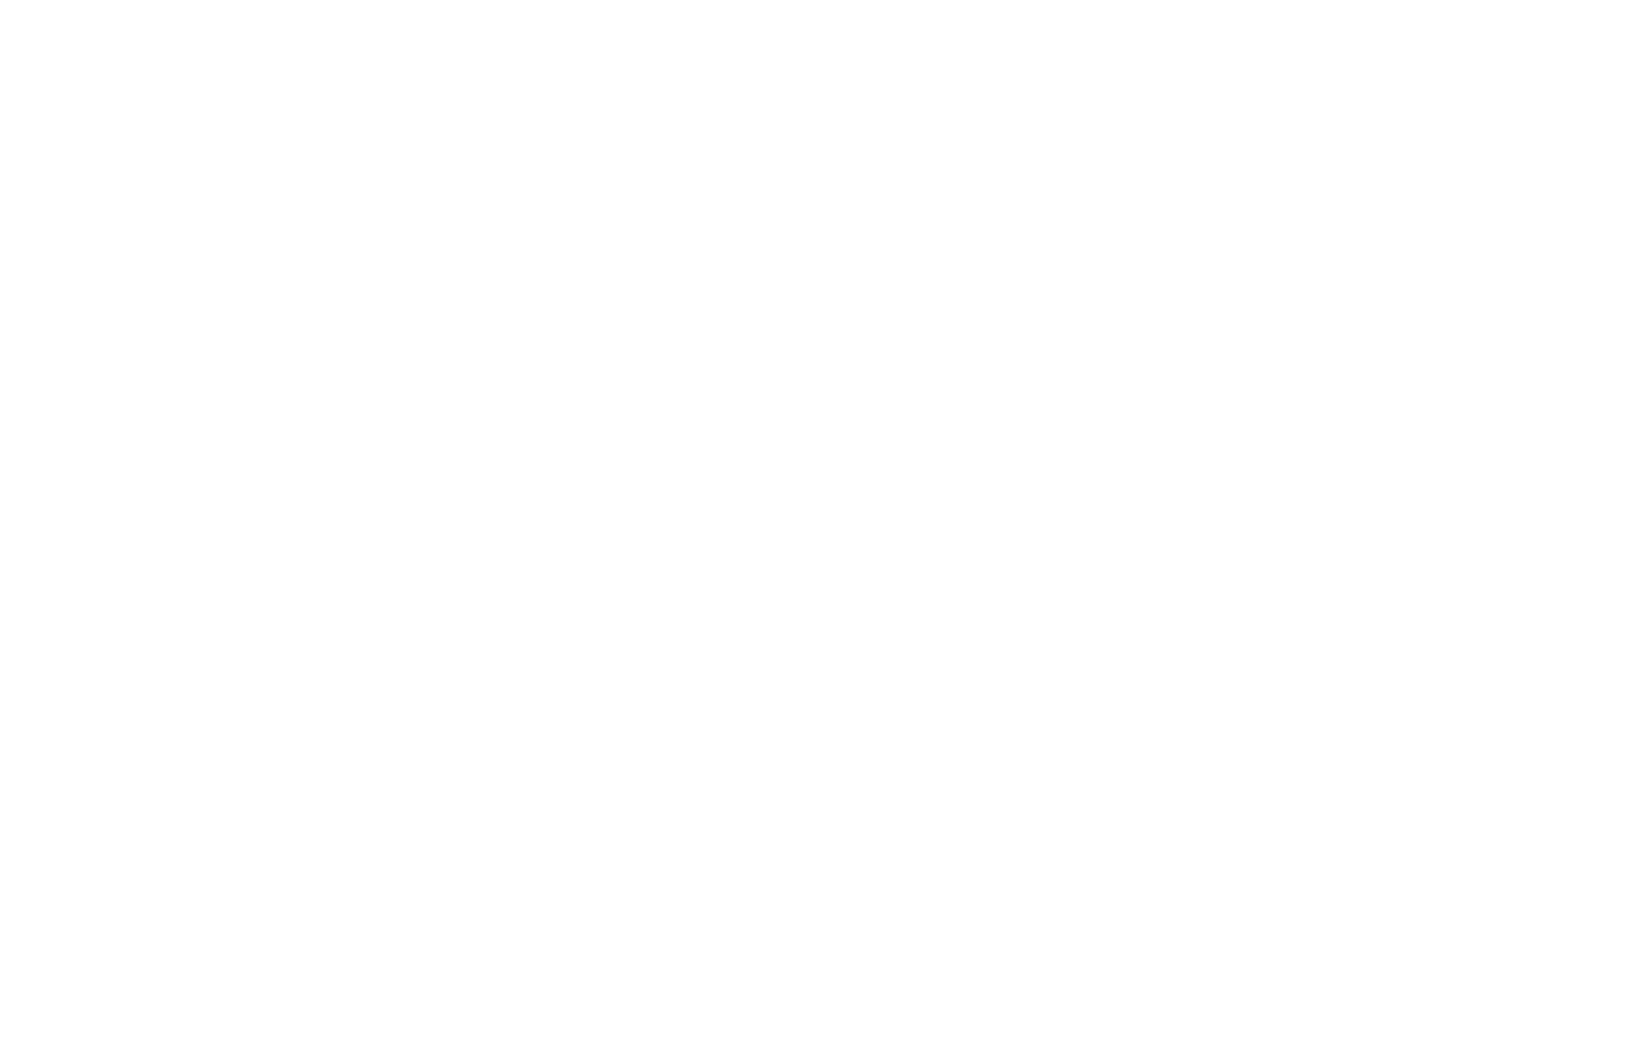 Intothecom – Marketing Digital